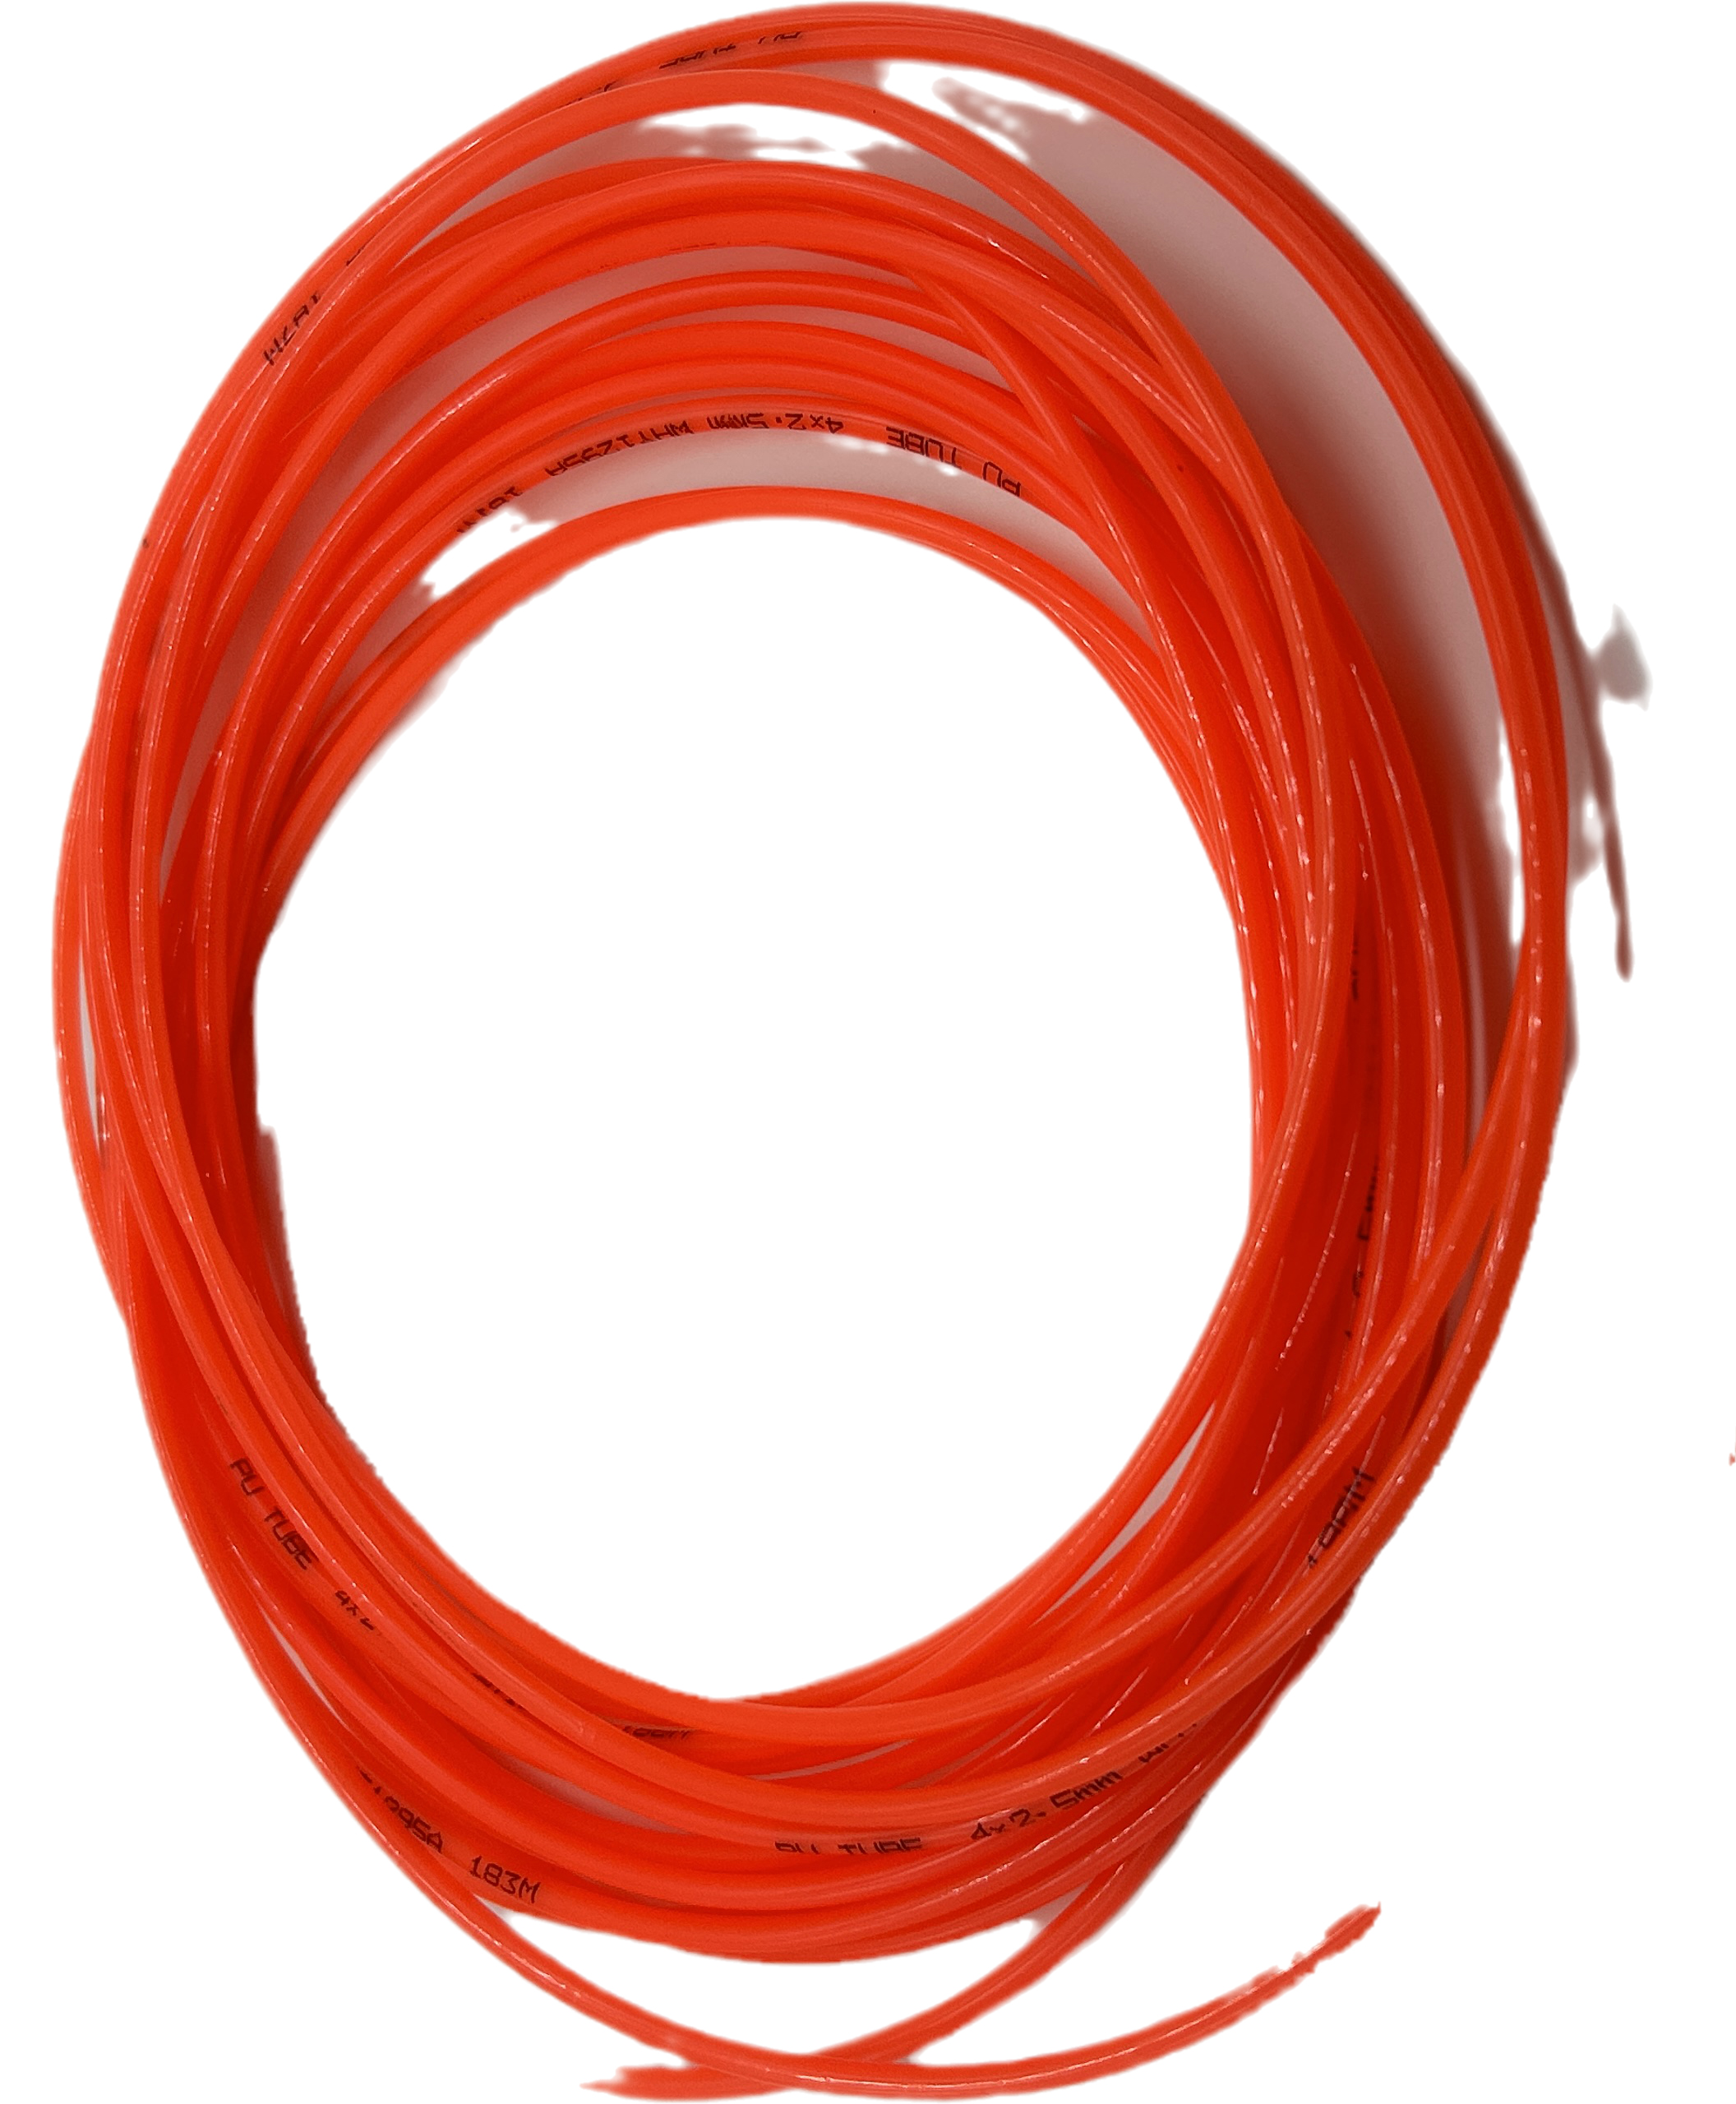  Polyurethane Tube Hose Pipe Pneumatic Pipe PU Hose Pu air hose 4 * 2.5 Orange 10 meters